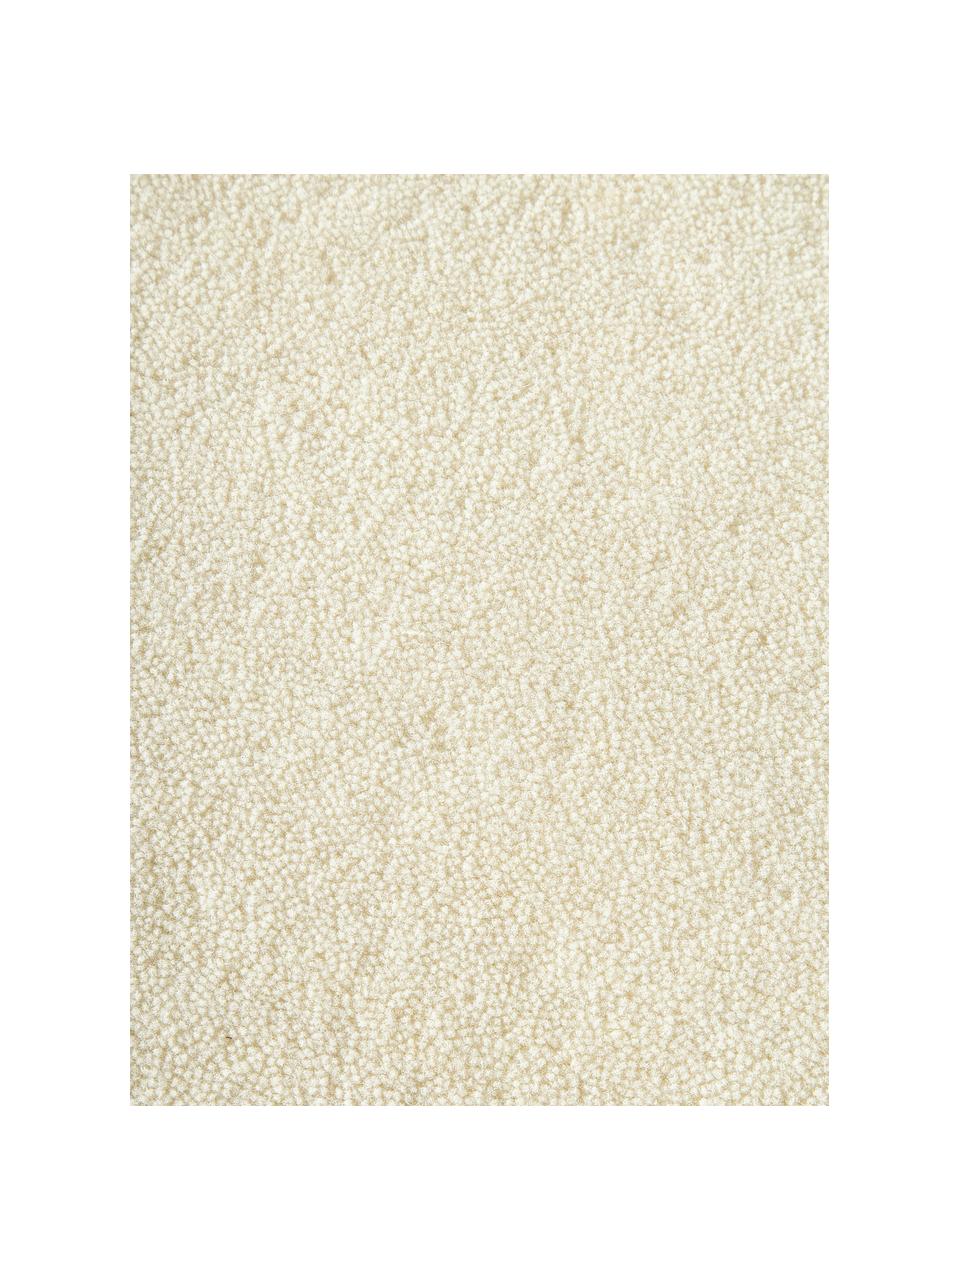 Alfombra artesanal de lana Ezra, Reverso: 70% algodón, 30% poliéste, Blanco crema, An 80 x L 150 cm (Tamaño XS)